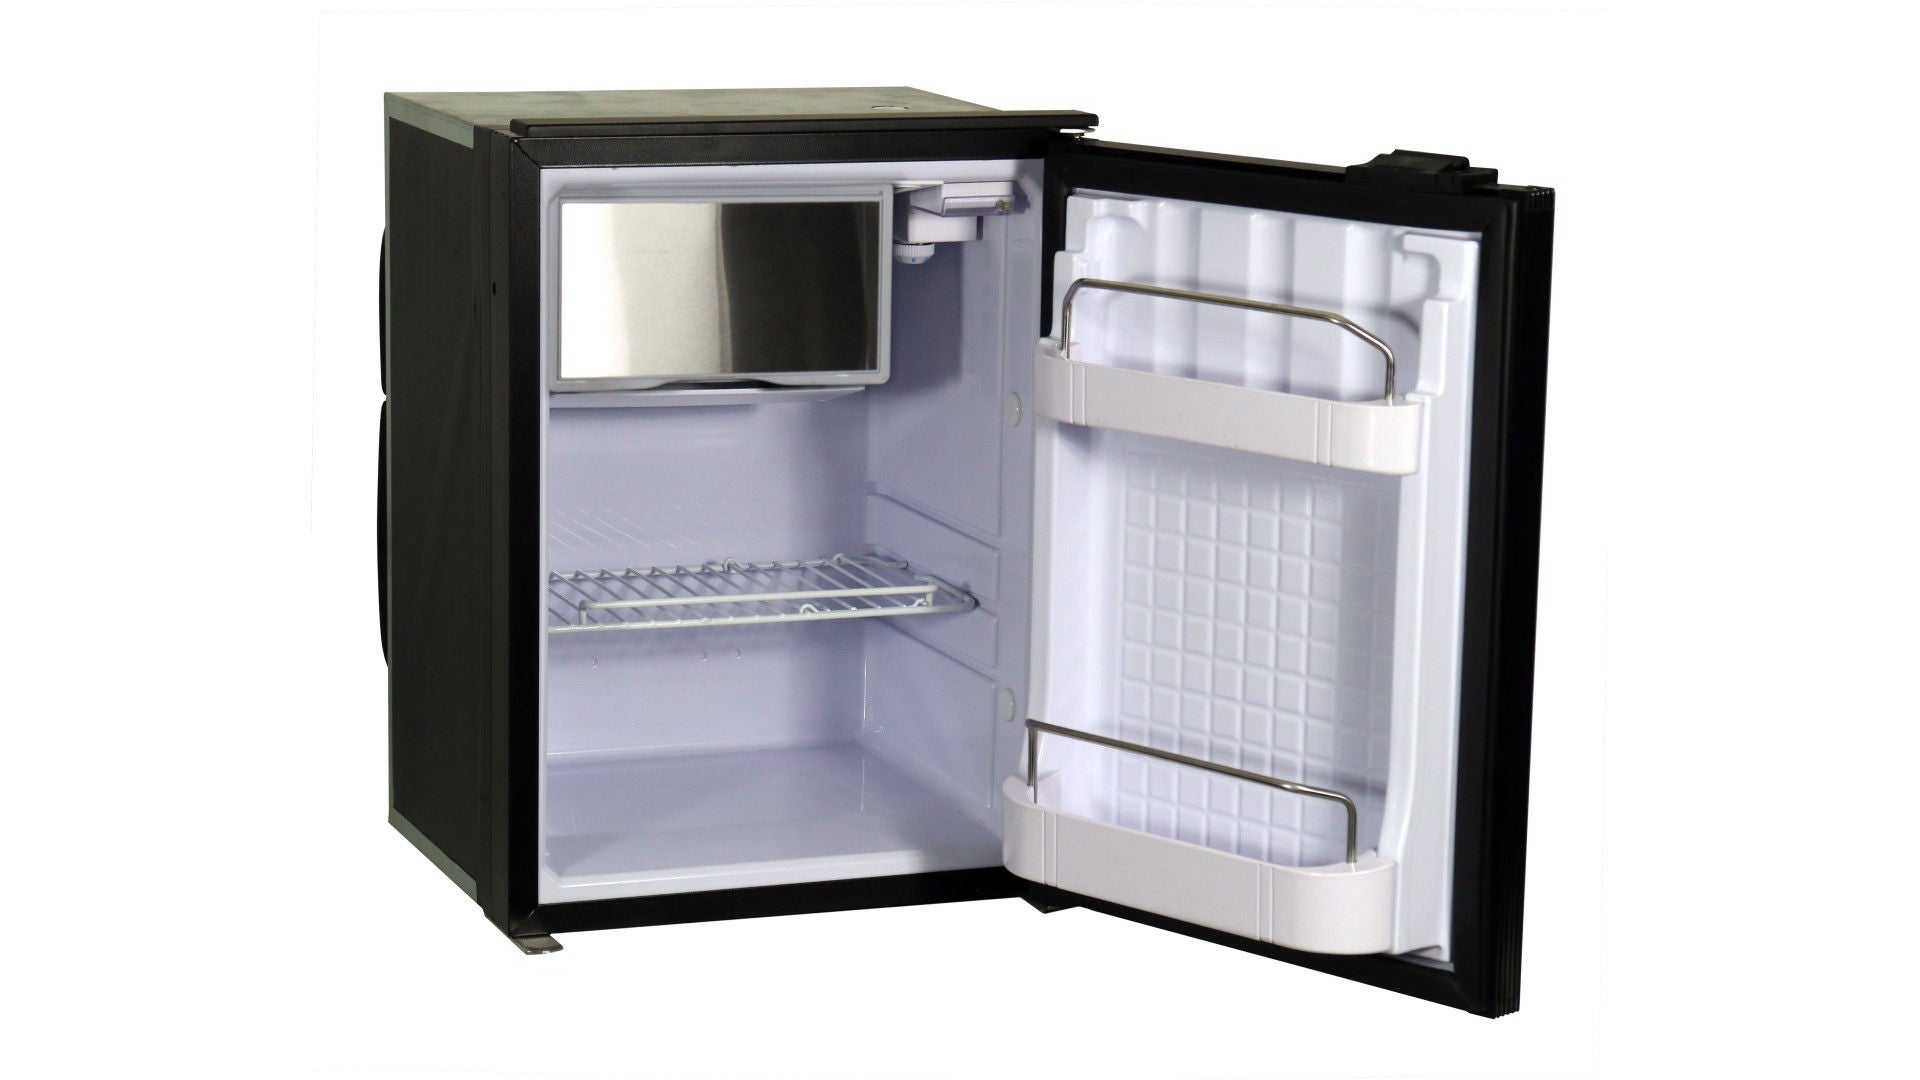 Product picture of Cruise 42 Inox fridge with open door